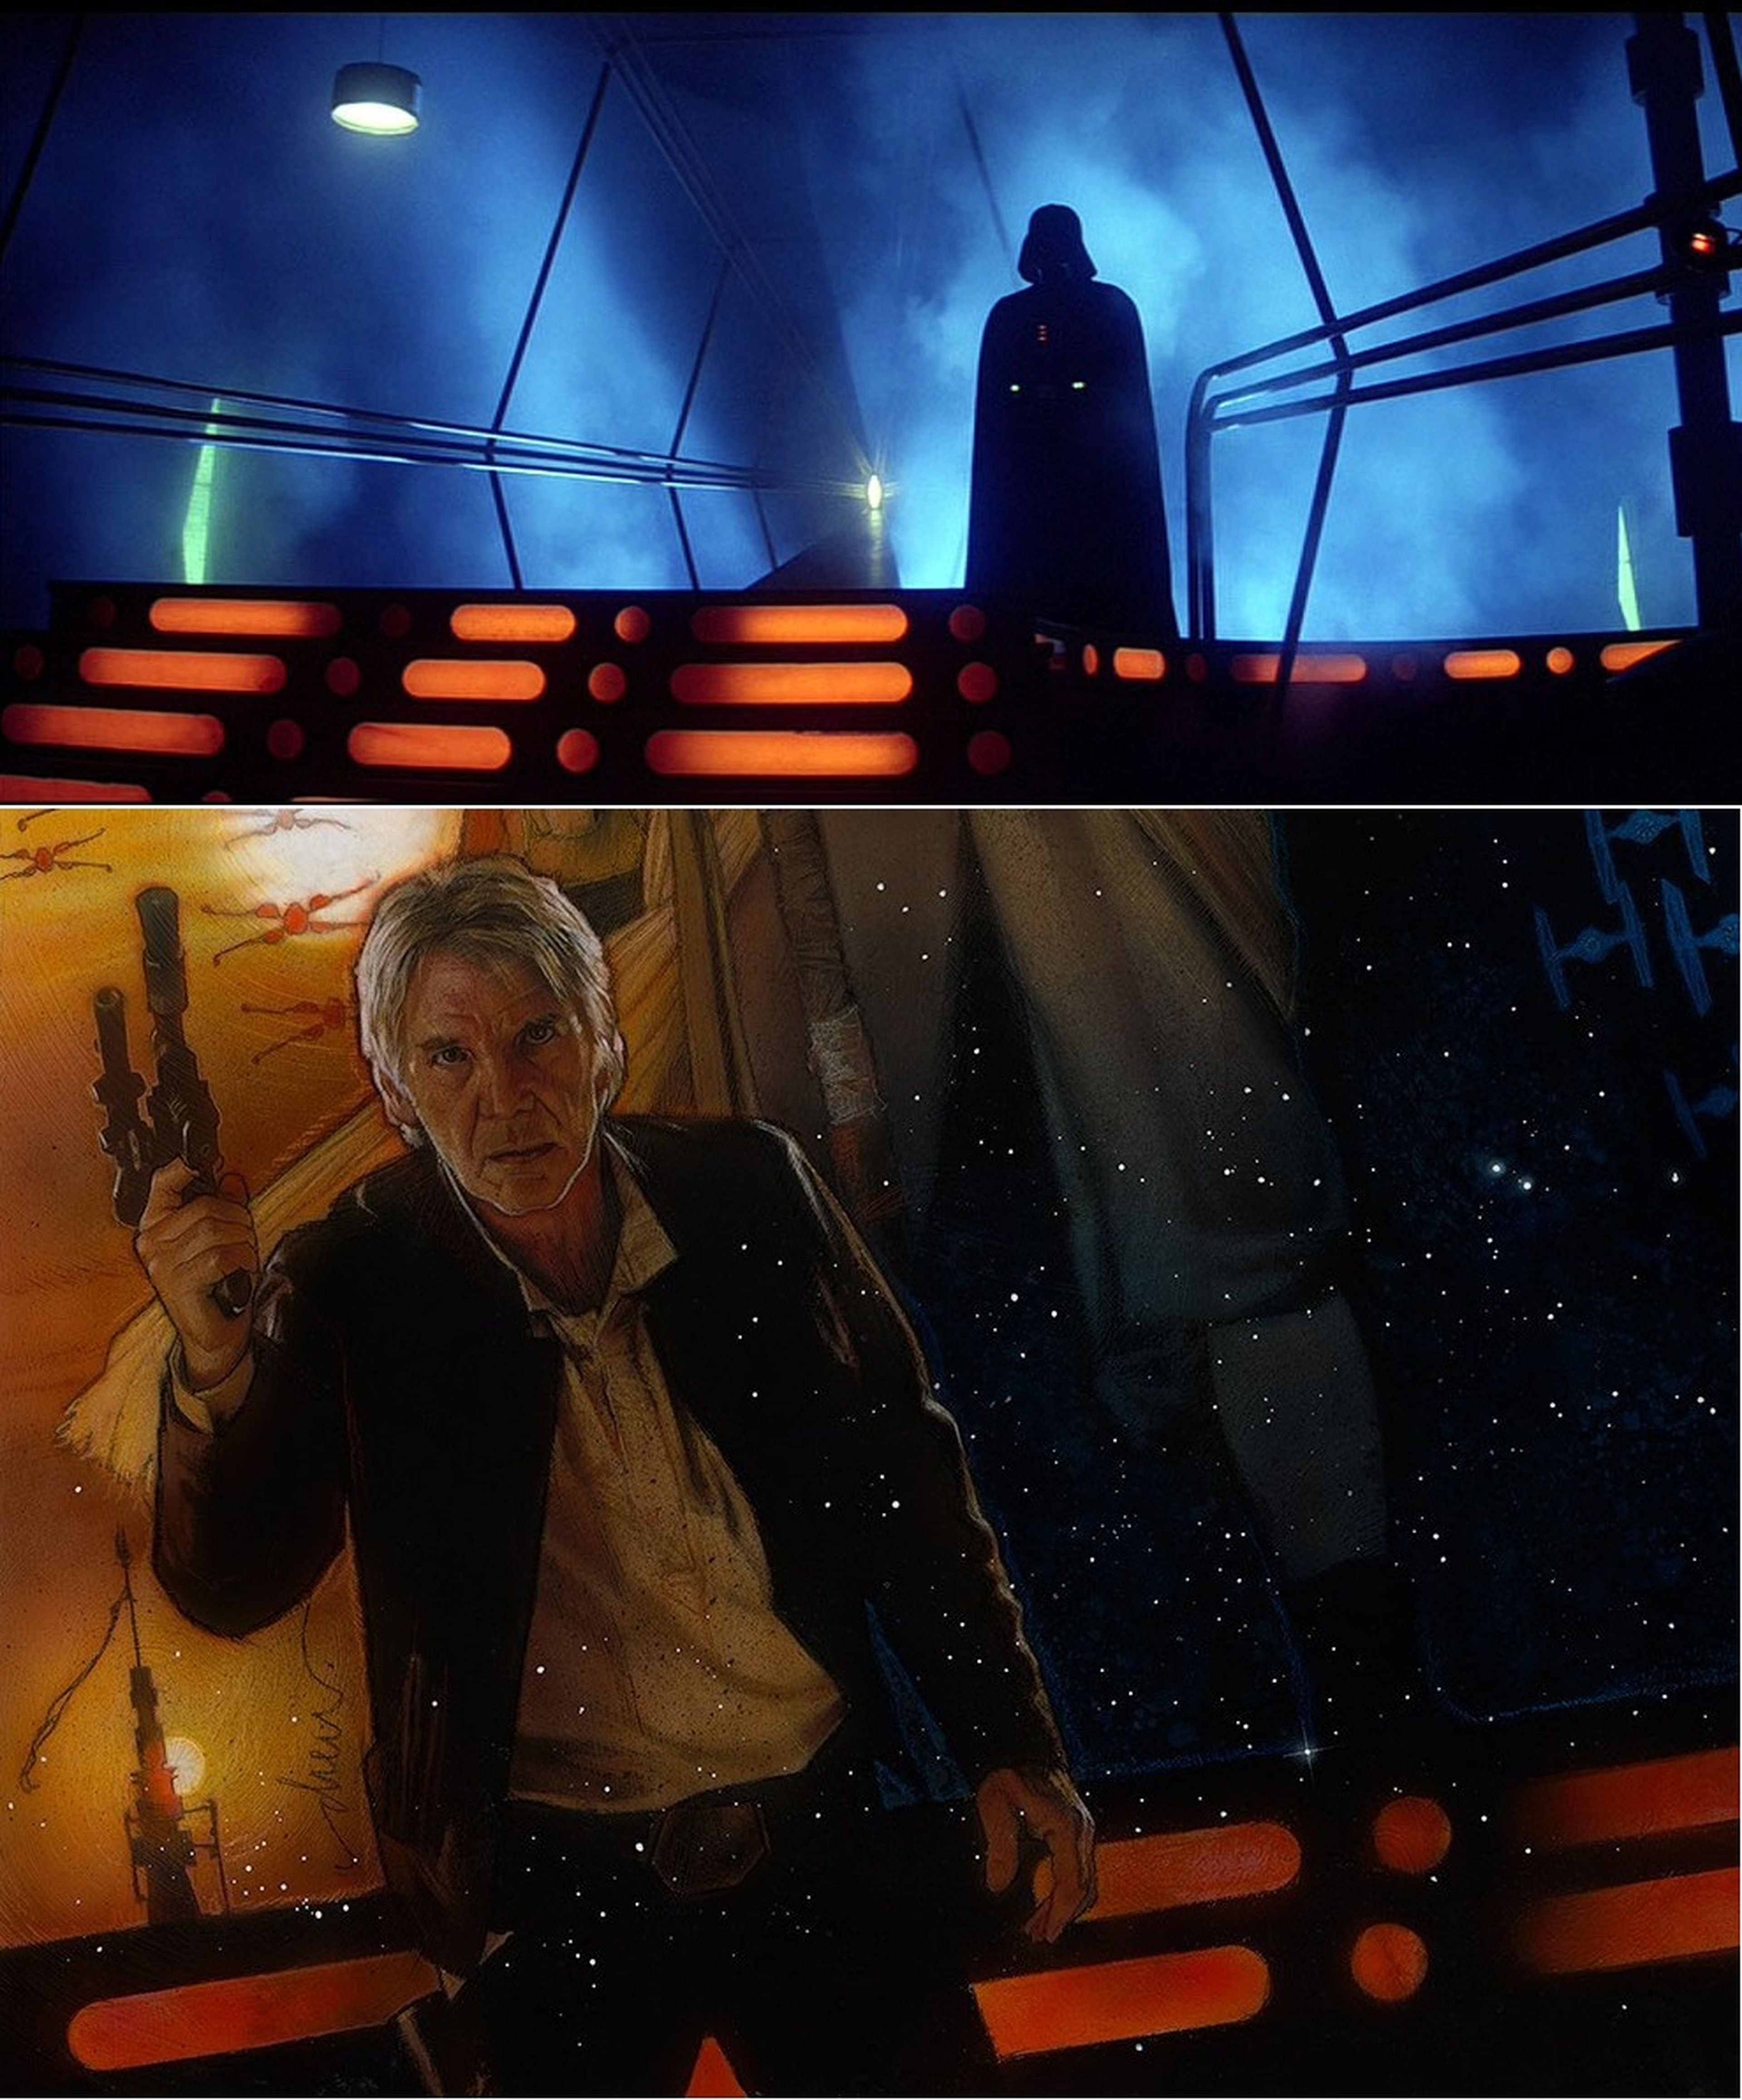 Detalles ocultos en el póster de Star Wars El despertar de la Fuerza